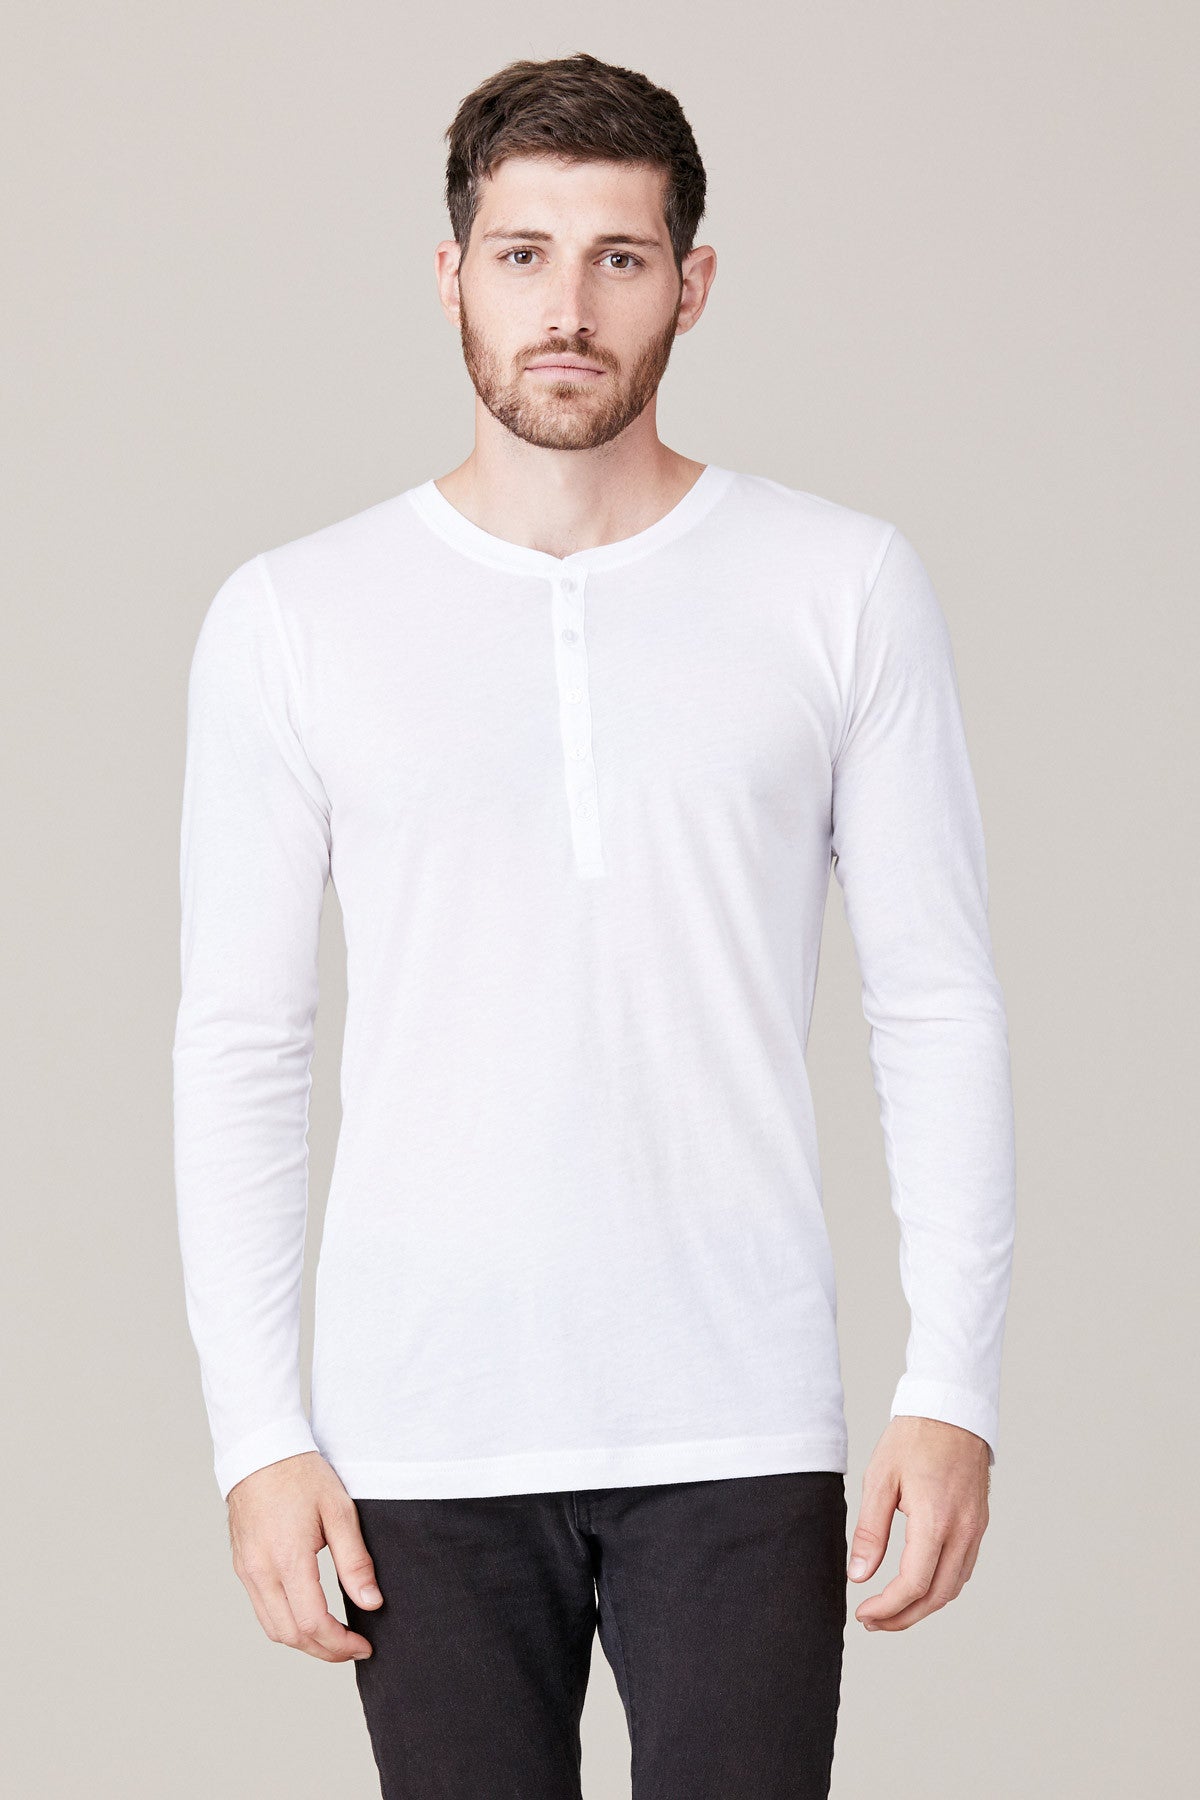 Men's Men's Long Sleeve Button Henley - White, XL by LNA Clothing